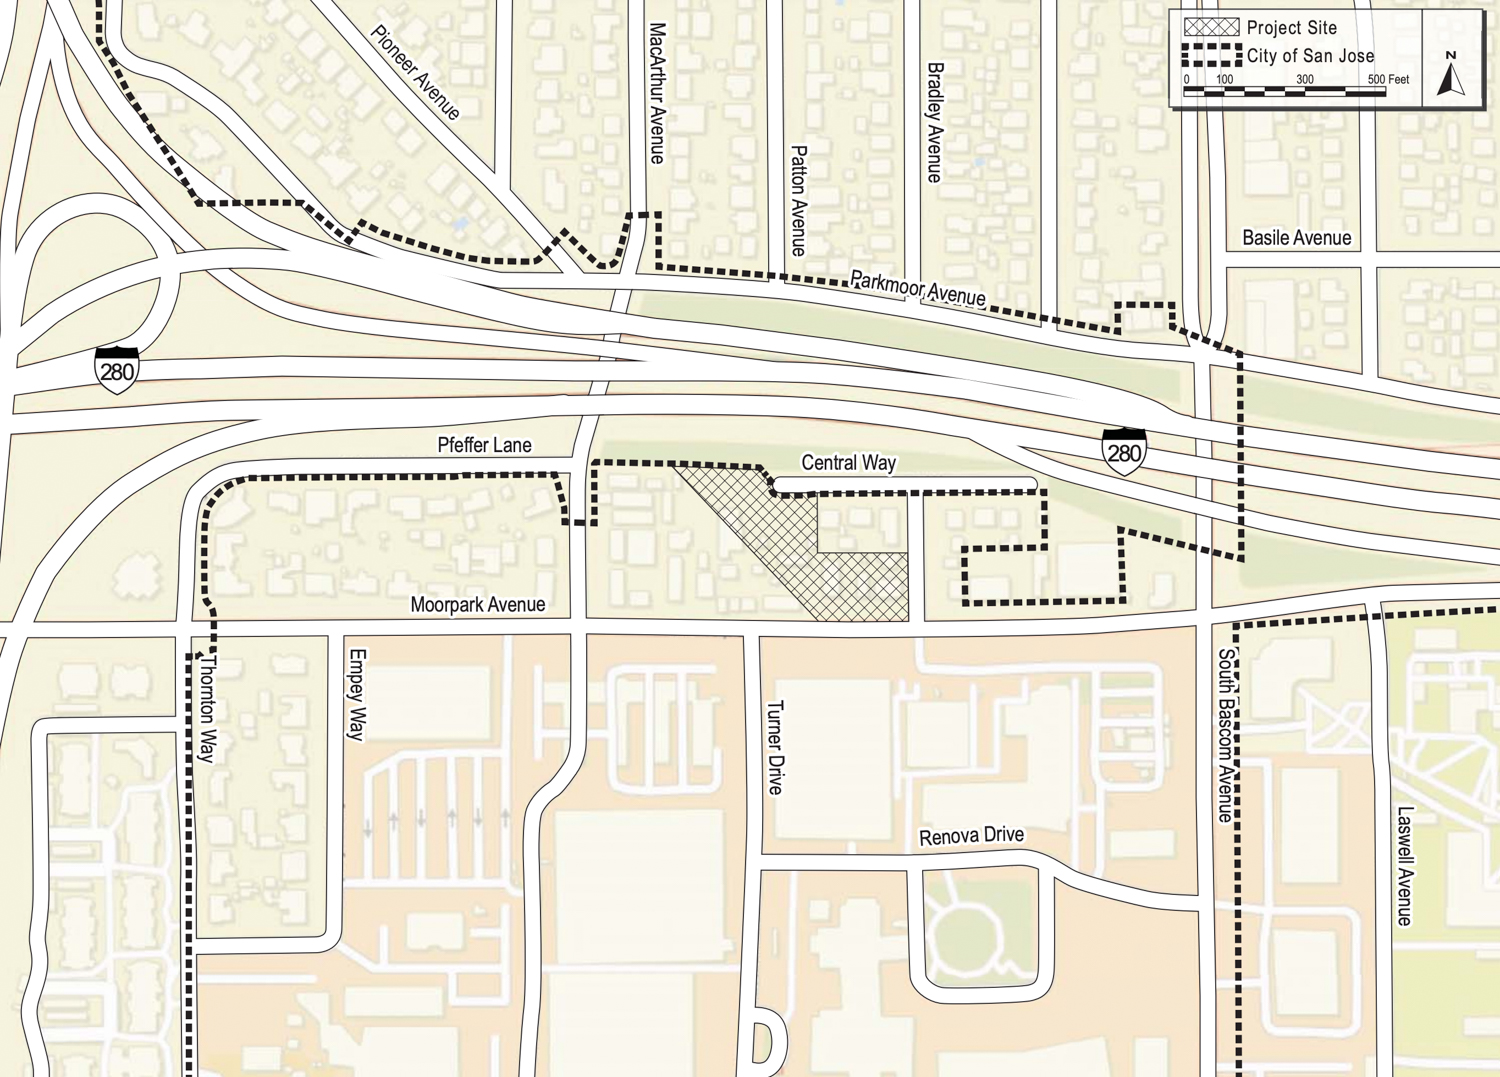 2323 Moorpark Avenue site area, via city planning documents